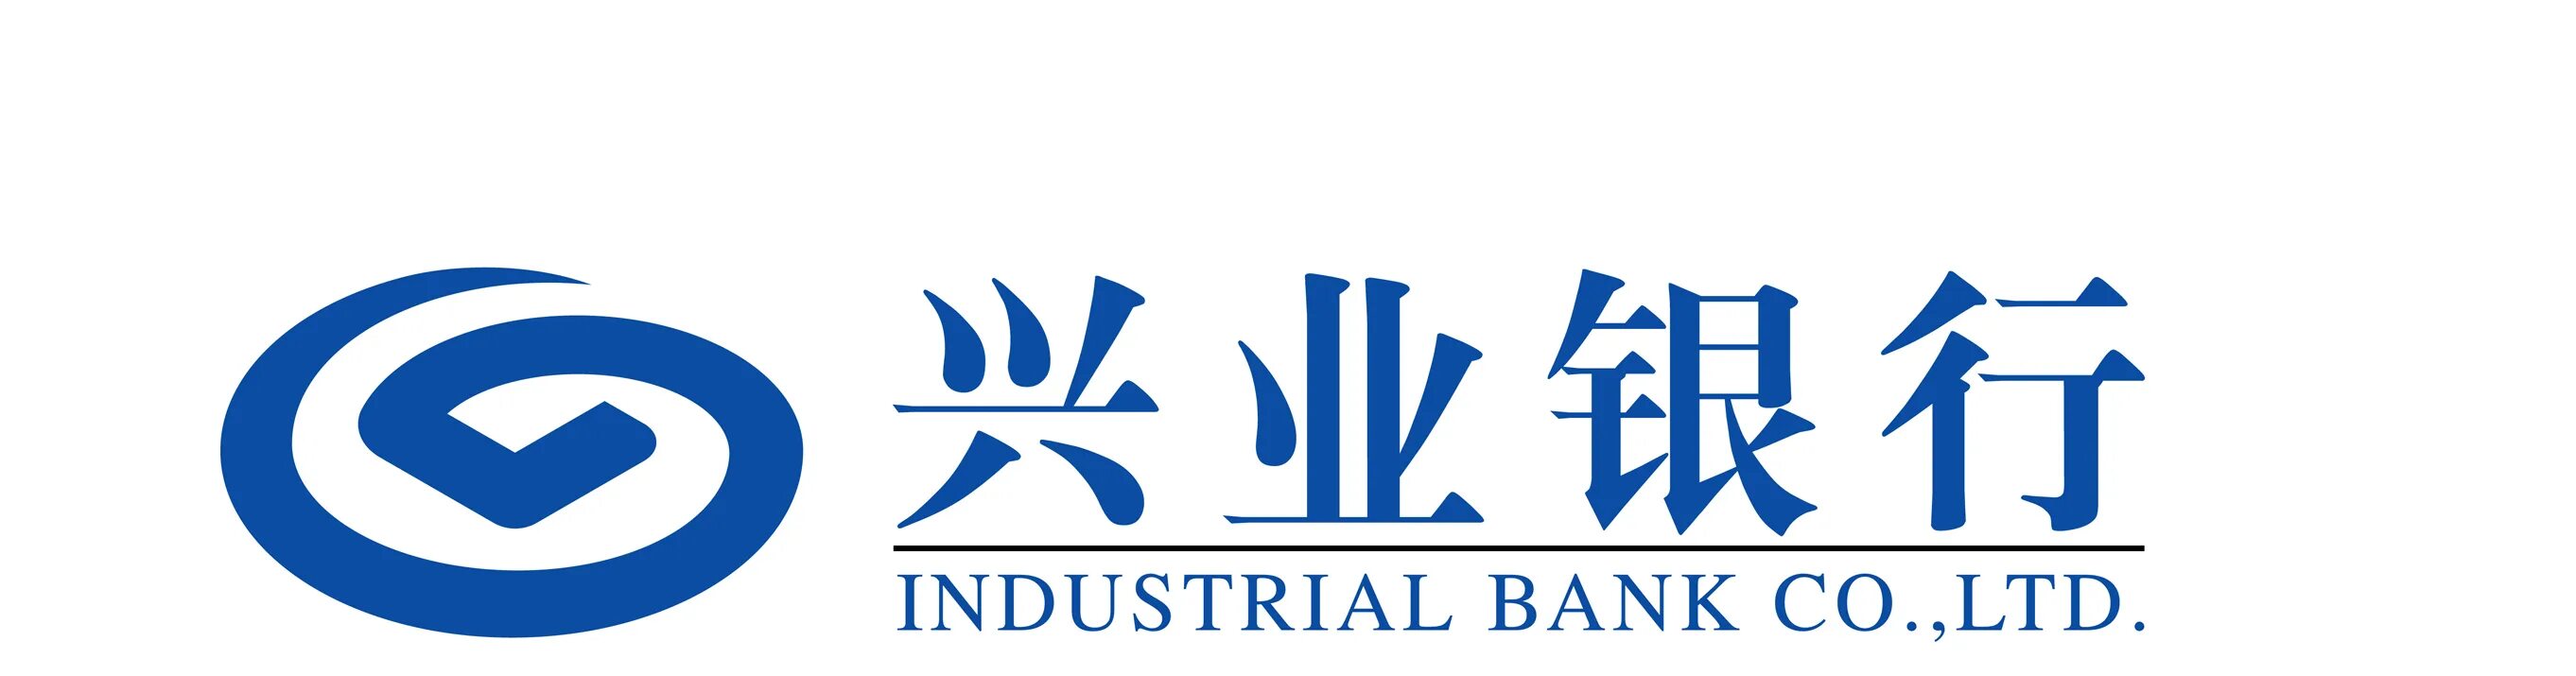 Bank of China logo. Экспортно-импортный банк Китая (the Export-Import Bank of China). Industrial Bank of Korea. Urals Financial and Industrial Bank логотип.